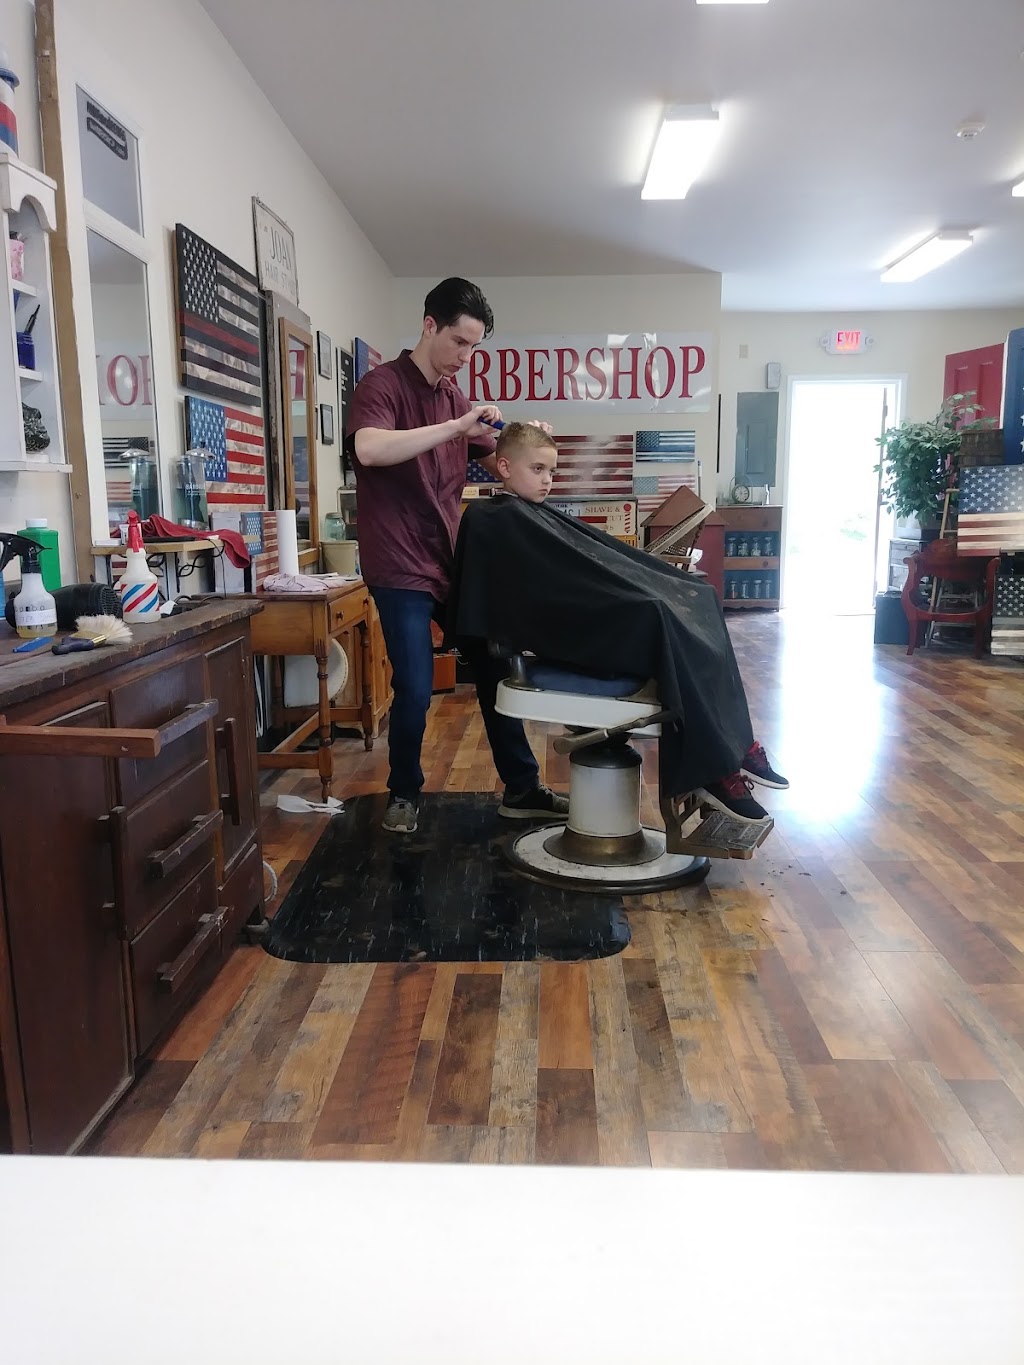 Hair and beard barbershop | 407 S Plank Rd, Newburgh, NY 12550 | Phone: (845) 326-7316